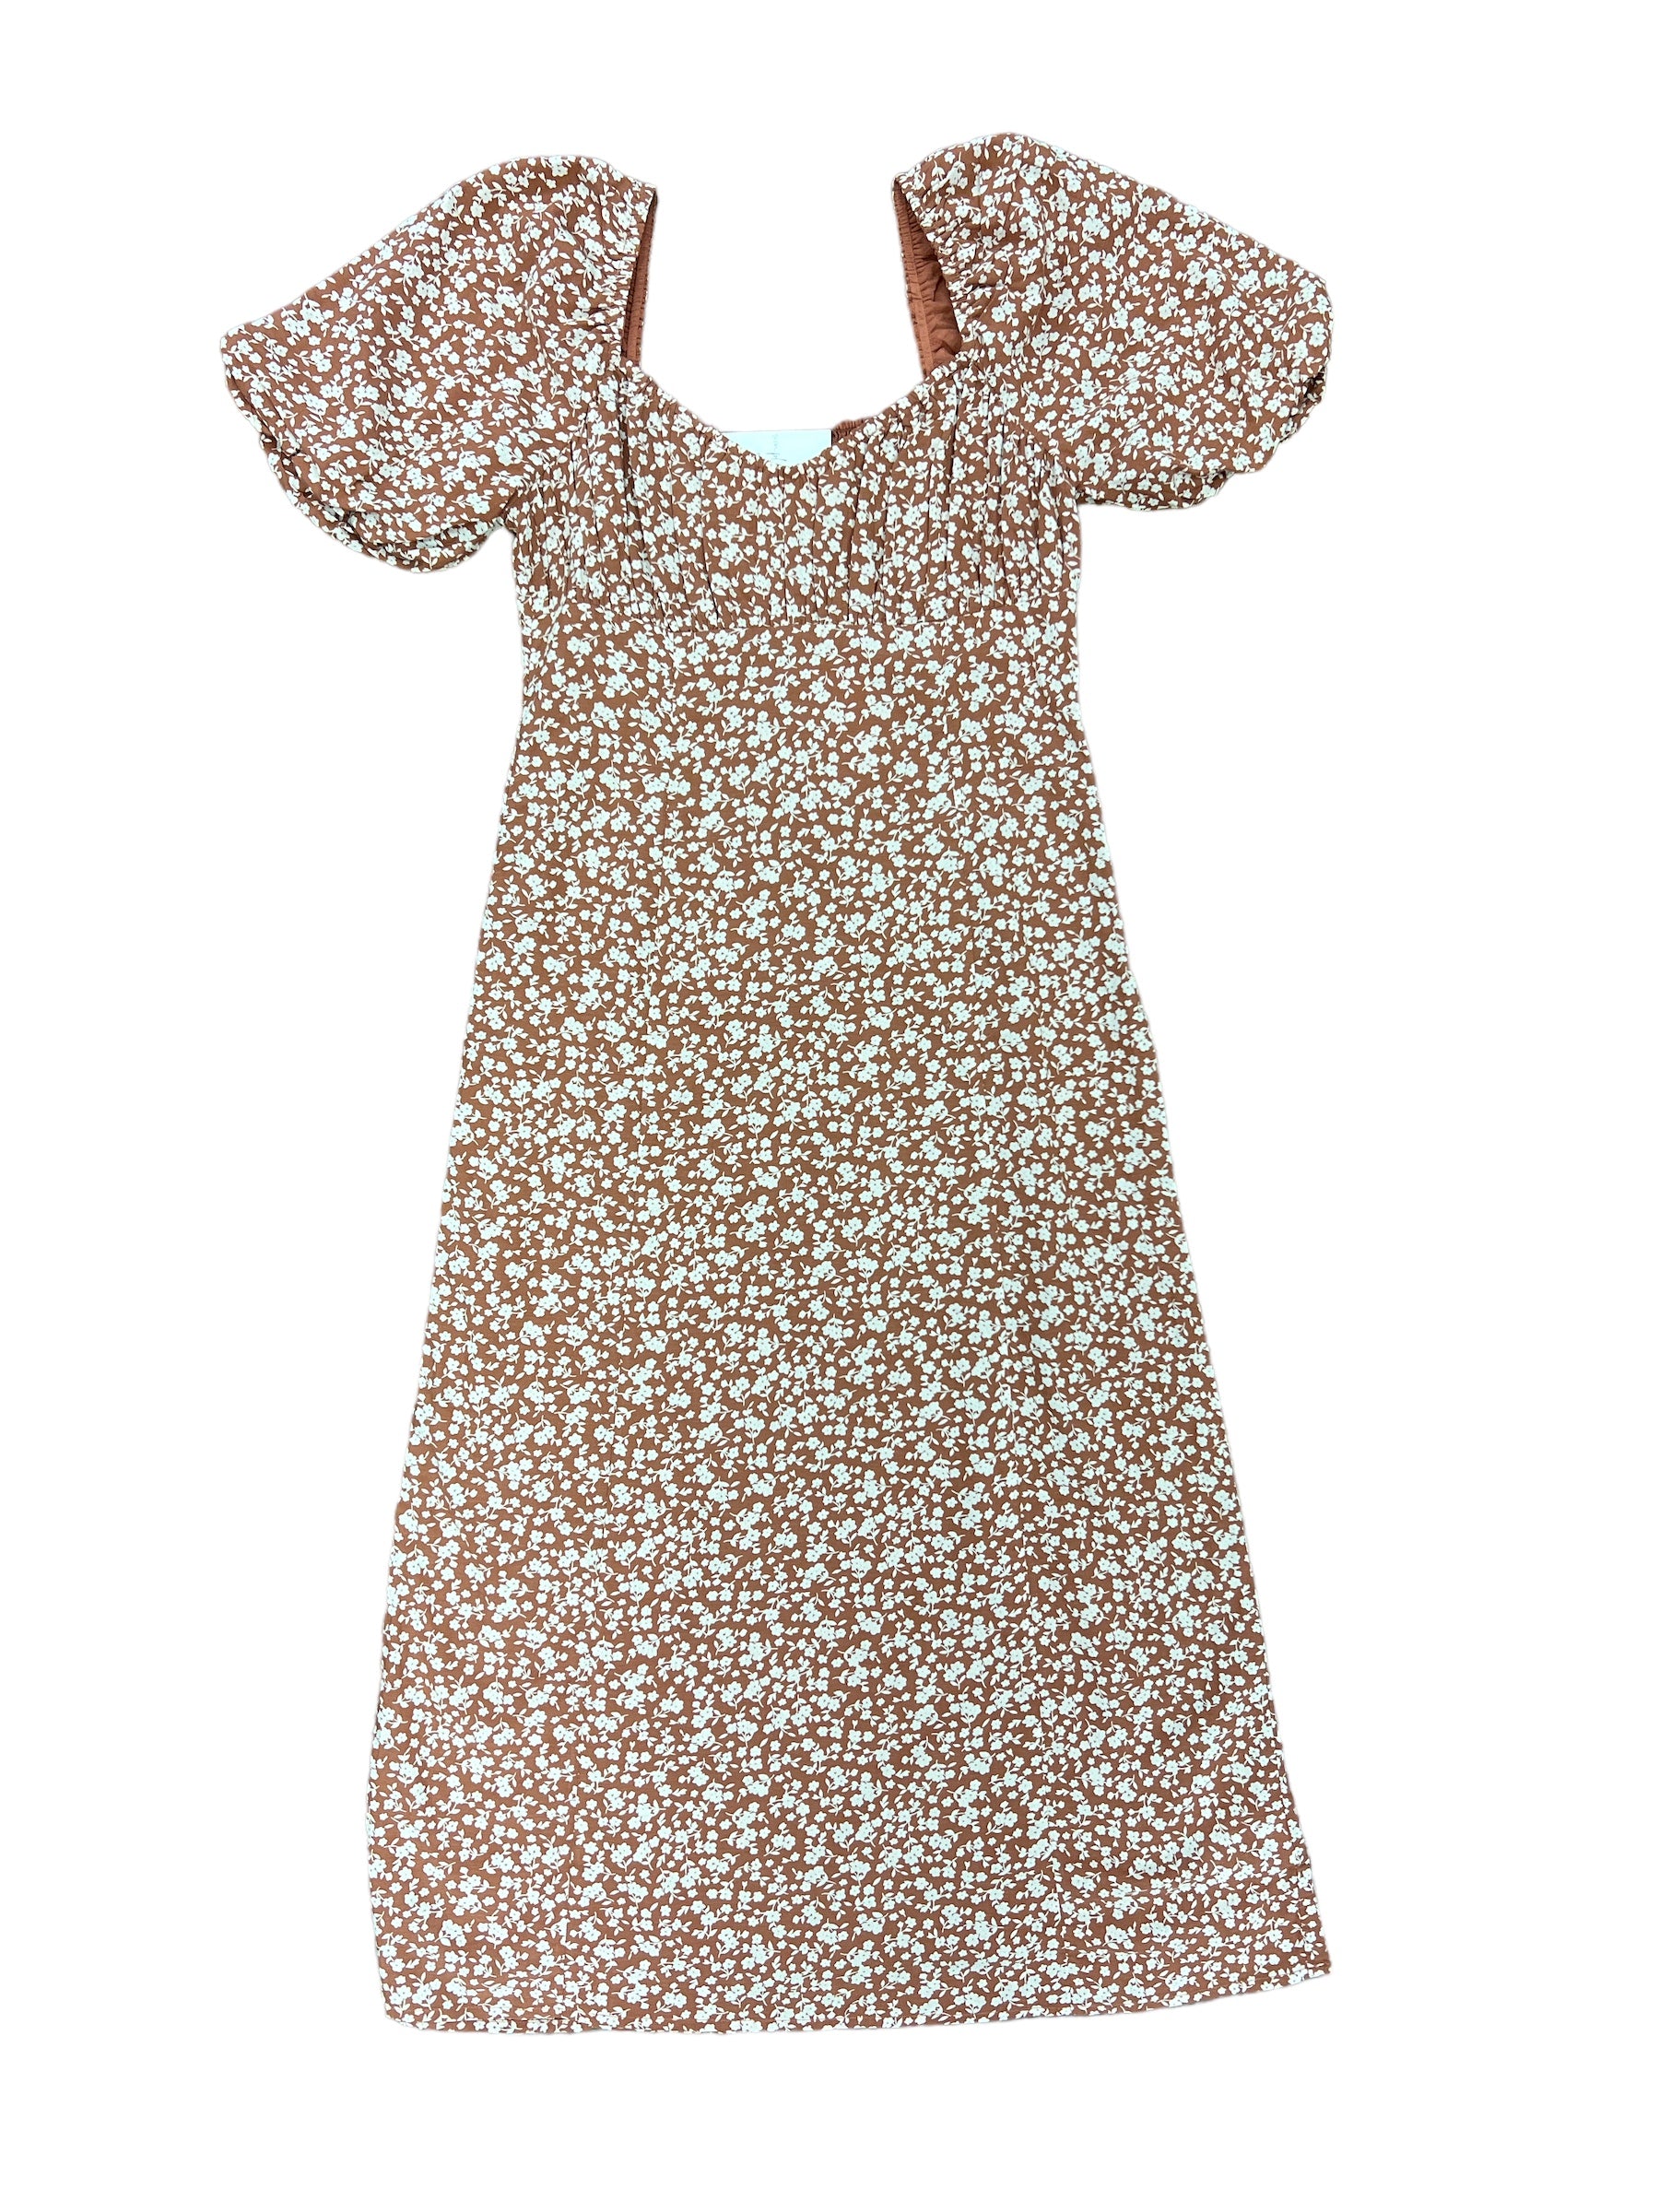 Kiera Floral Midi Dress-310 Dresses-Simply Stylish Boutique-Simply Stylish Boutique | Women’s & Kid’s Fashion | Paducah, KY